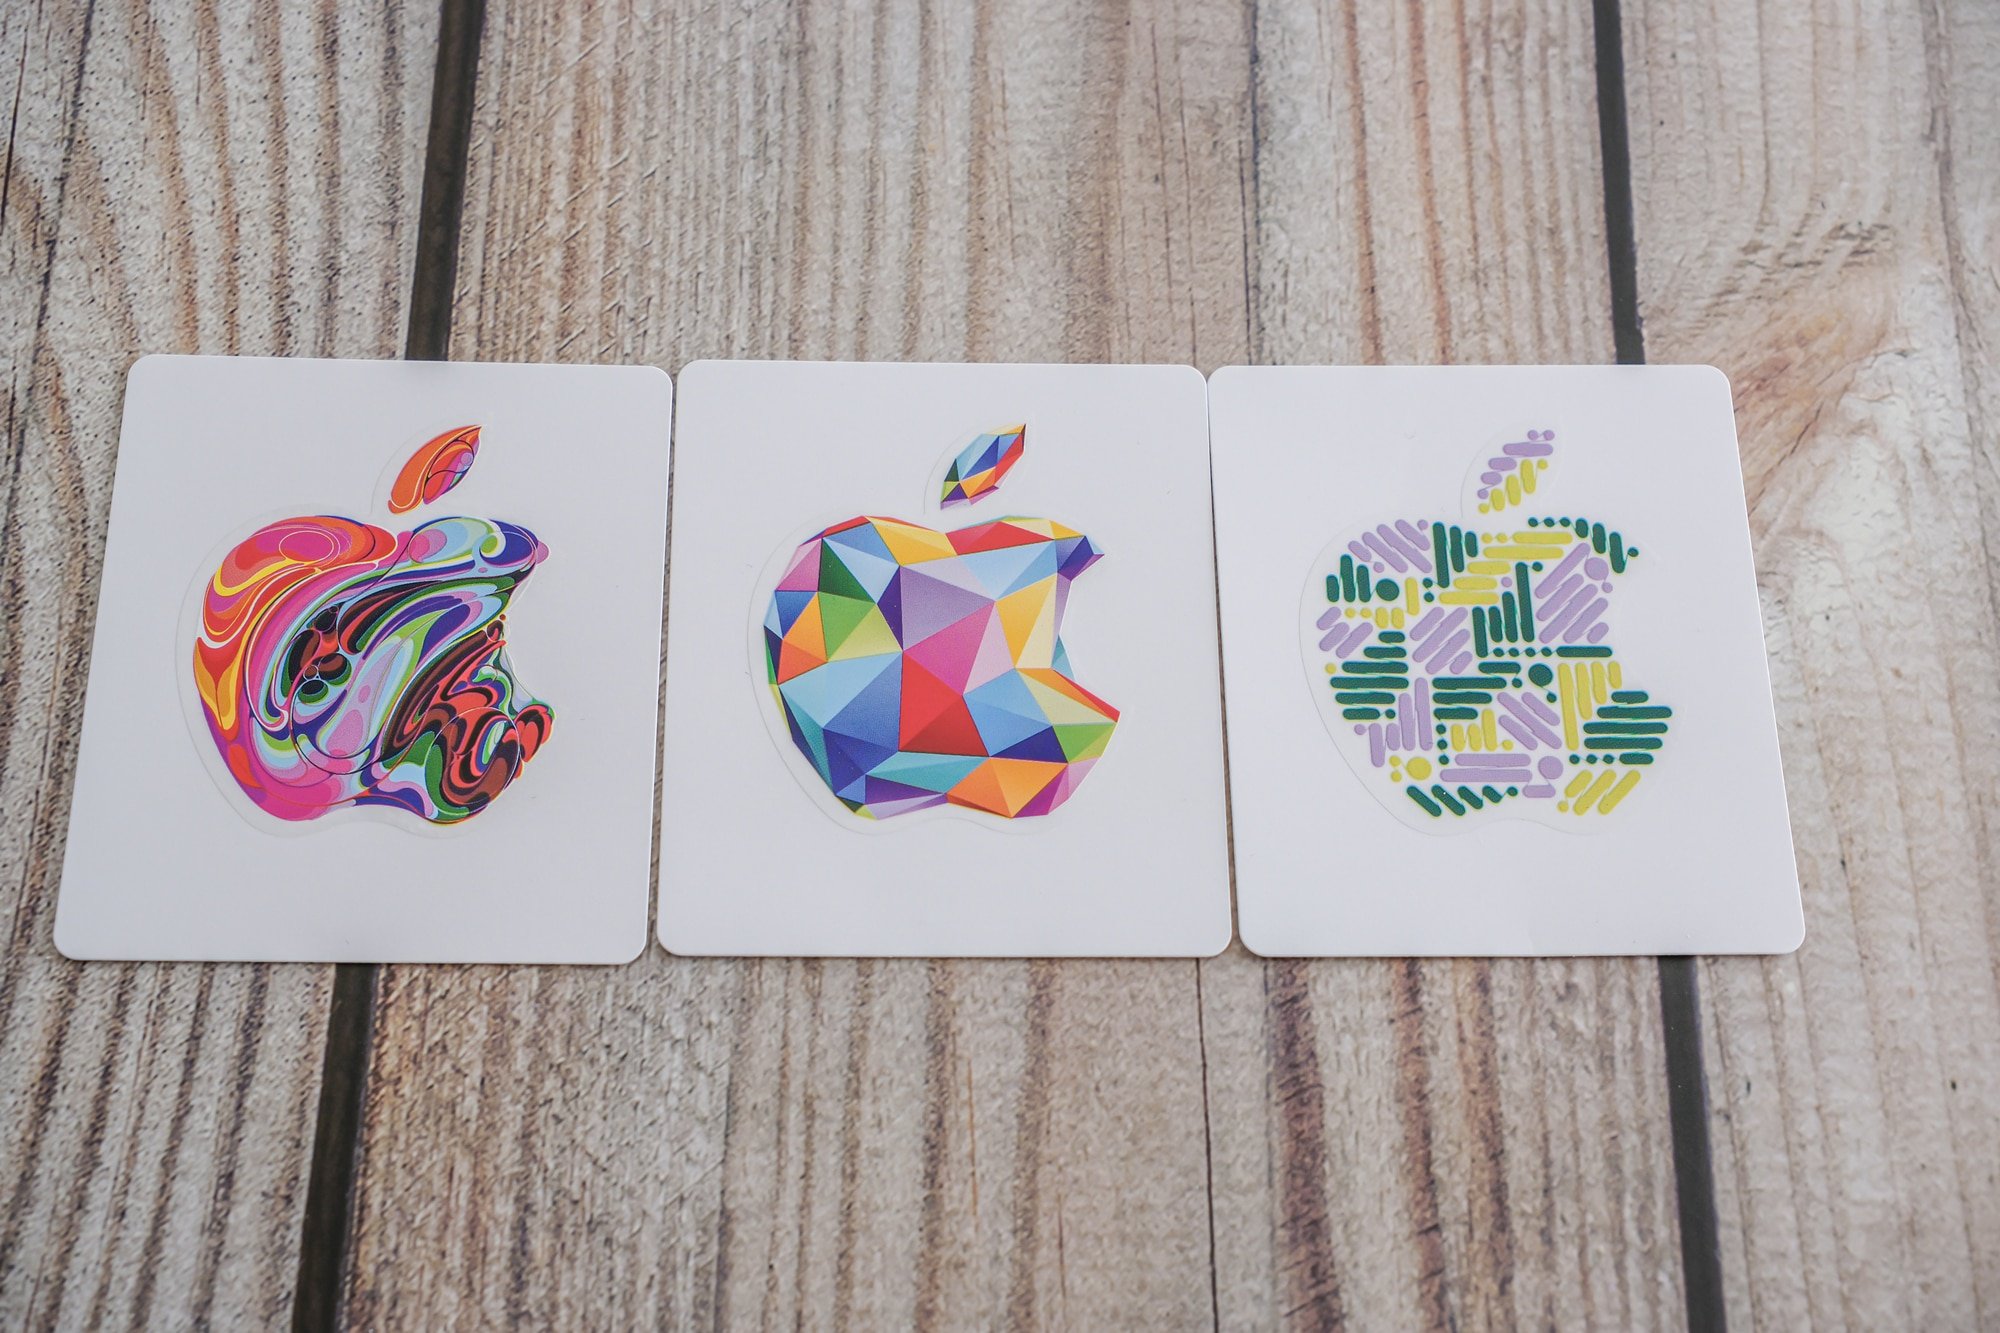 Apple Gift Card (IT)